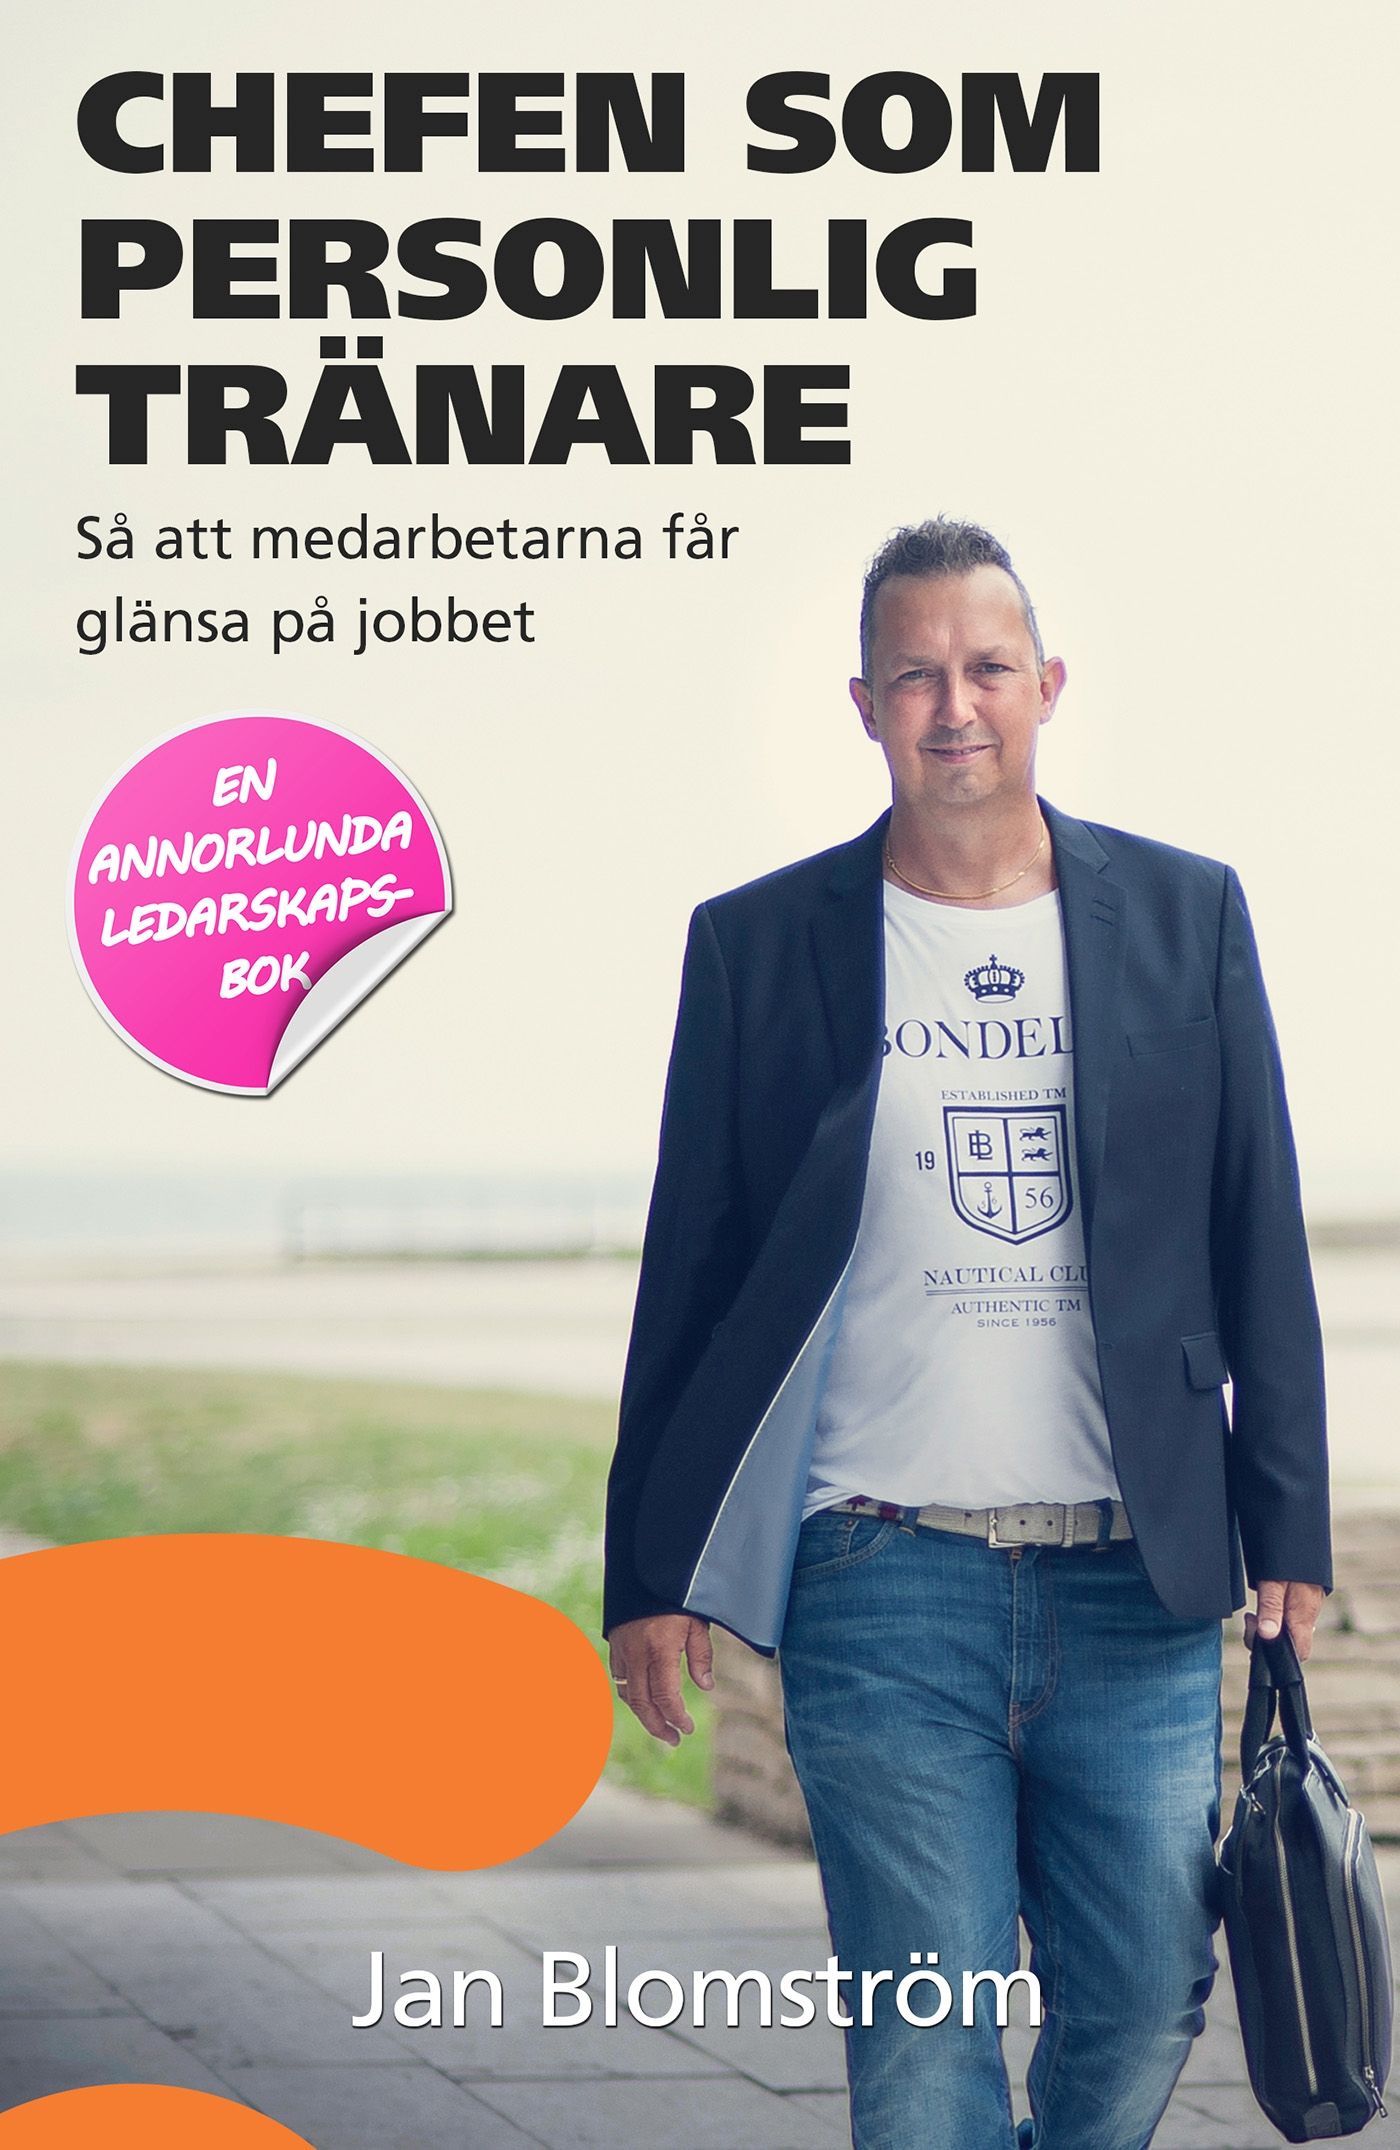 Chefen som personlig tränare, e-bok av Jan Blomström